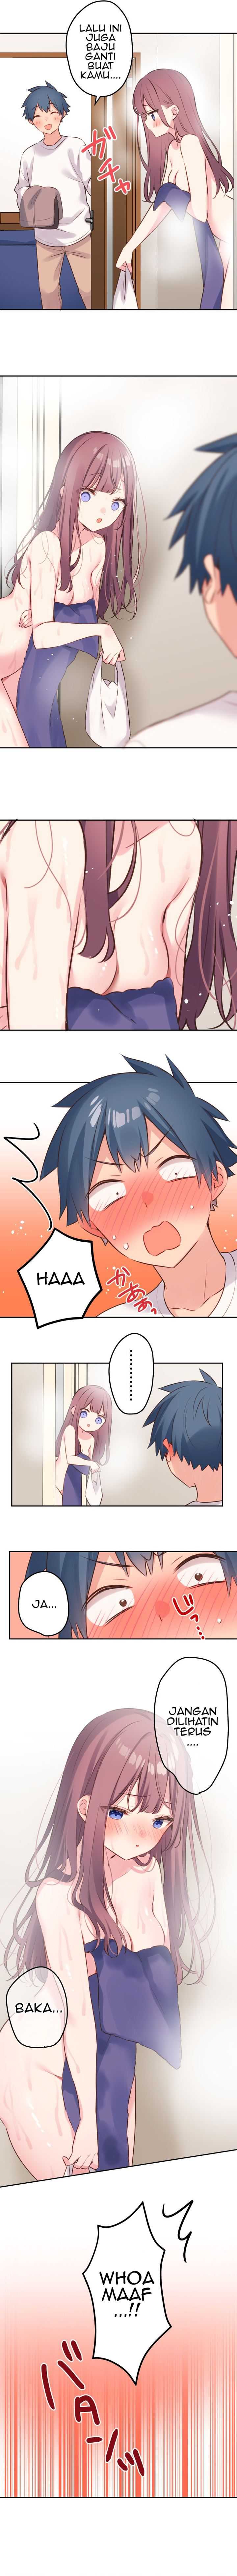 Waka-chan Is Flirty Again Chapter 117